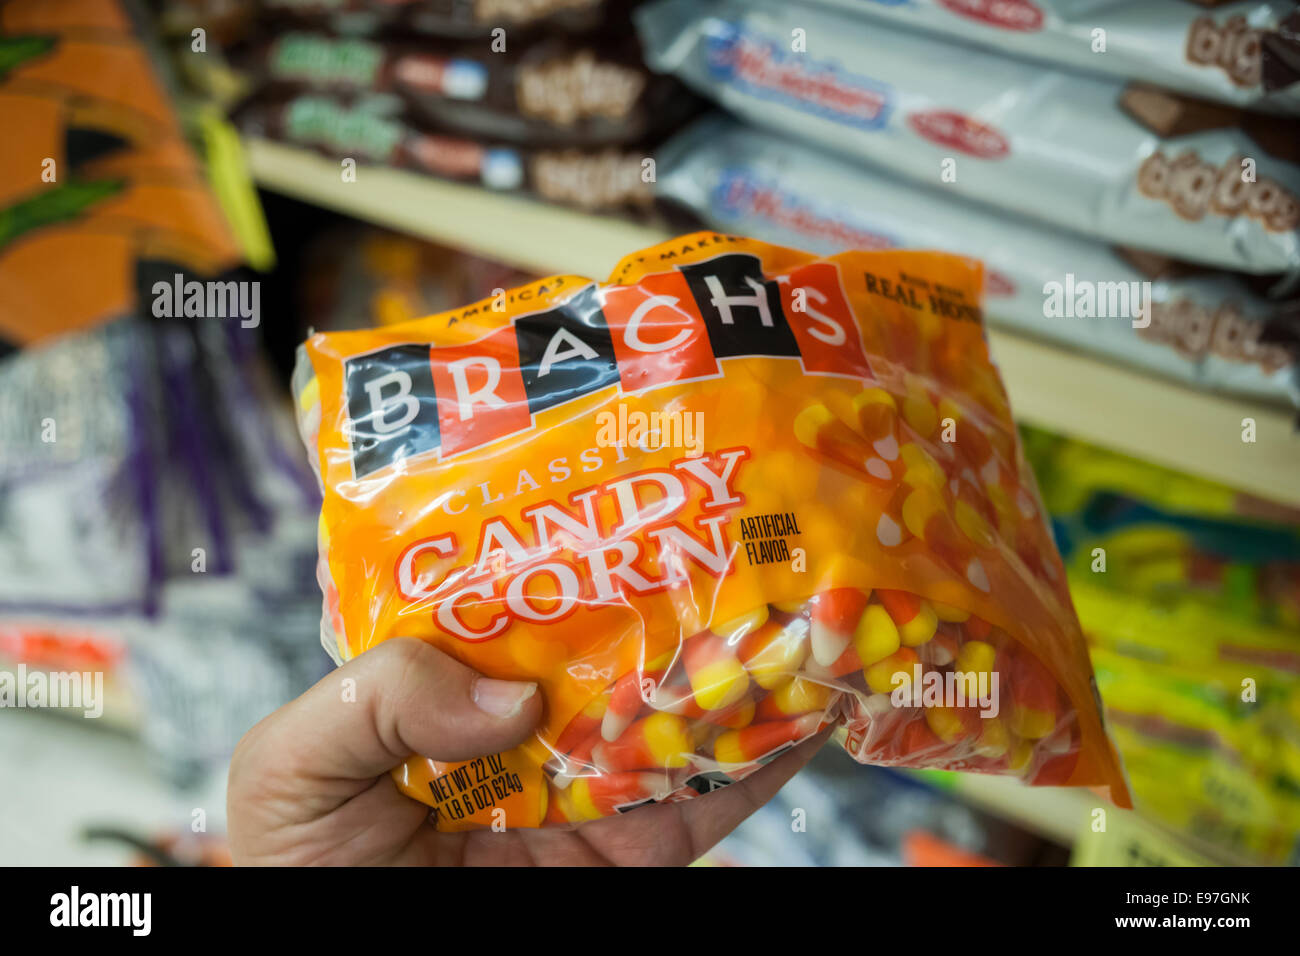 A shopper chooses a bag of Brach's Halloween candy corn in a